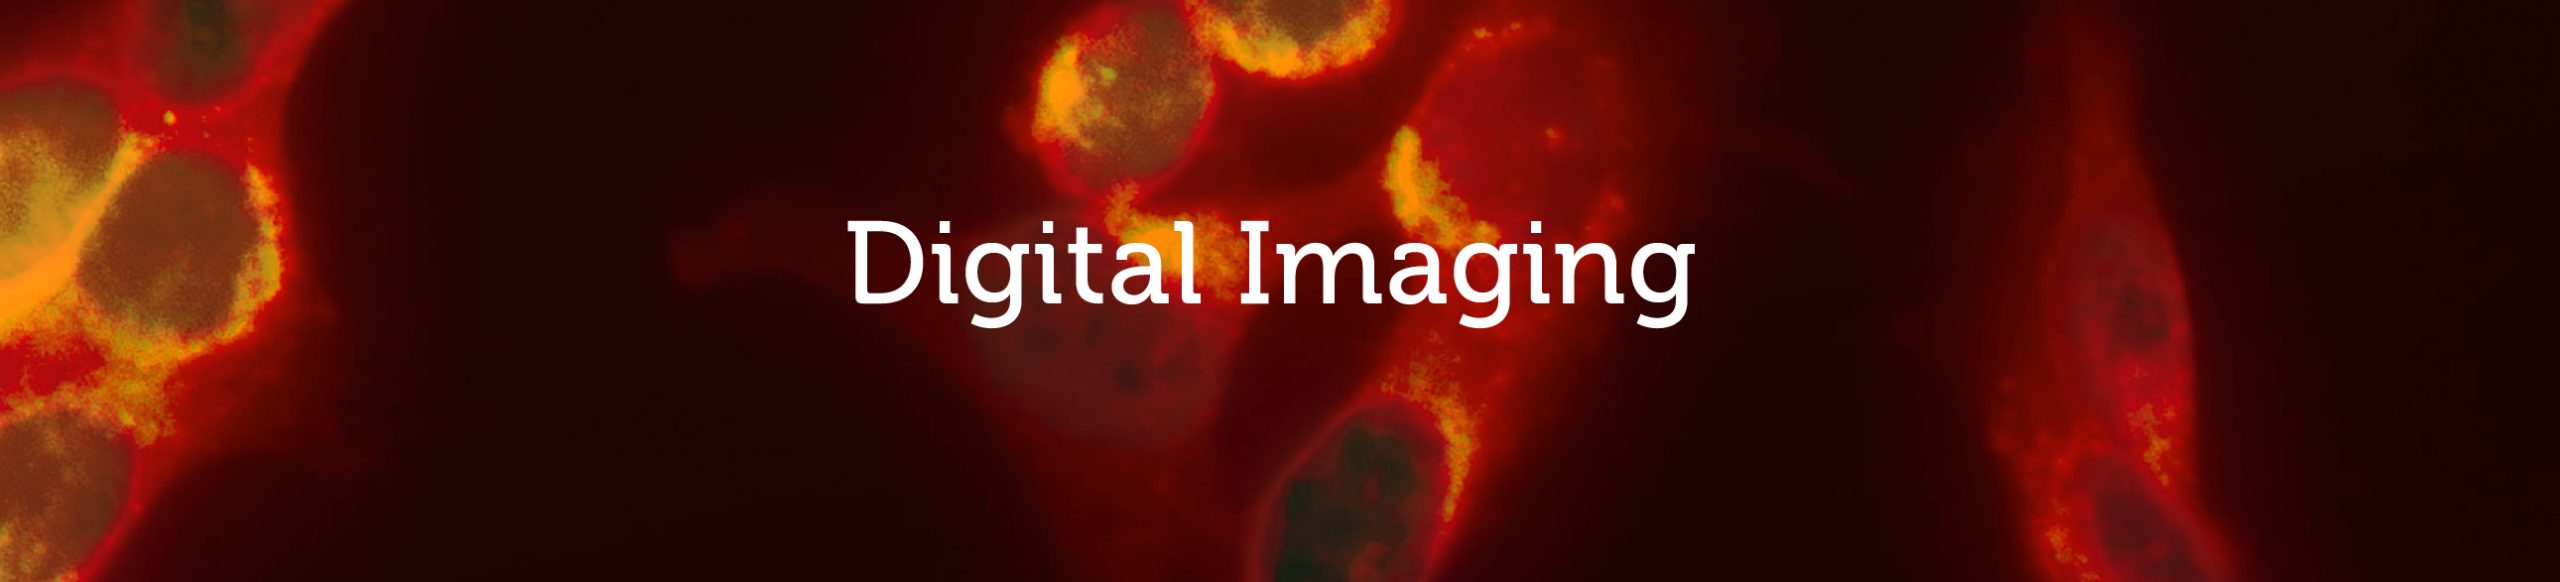 Digital Imaging divider